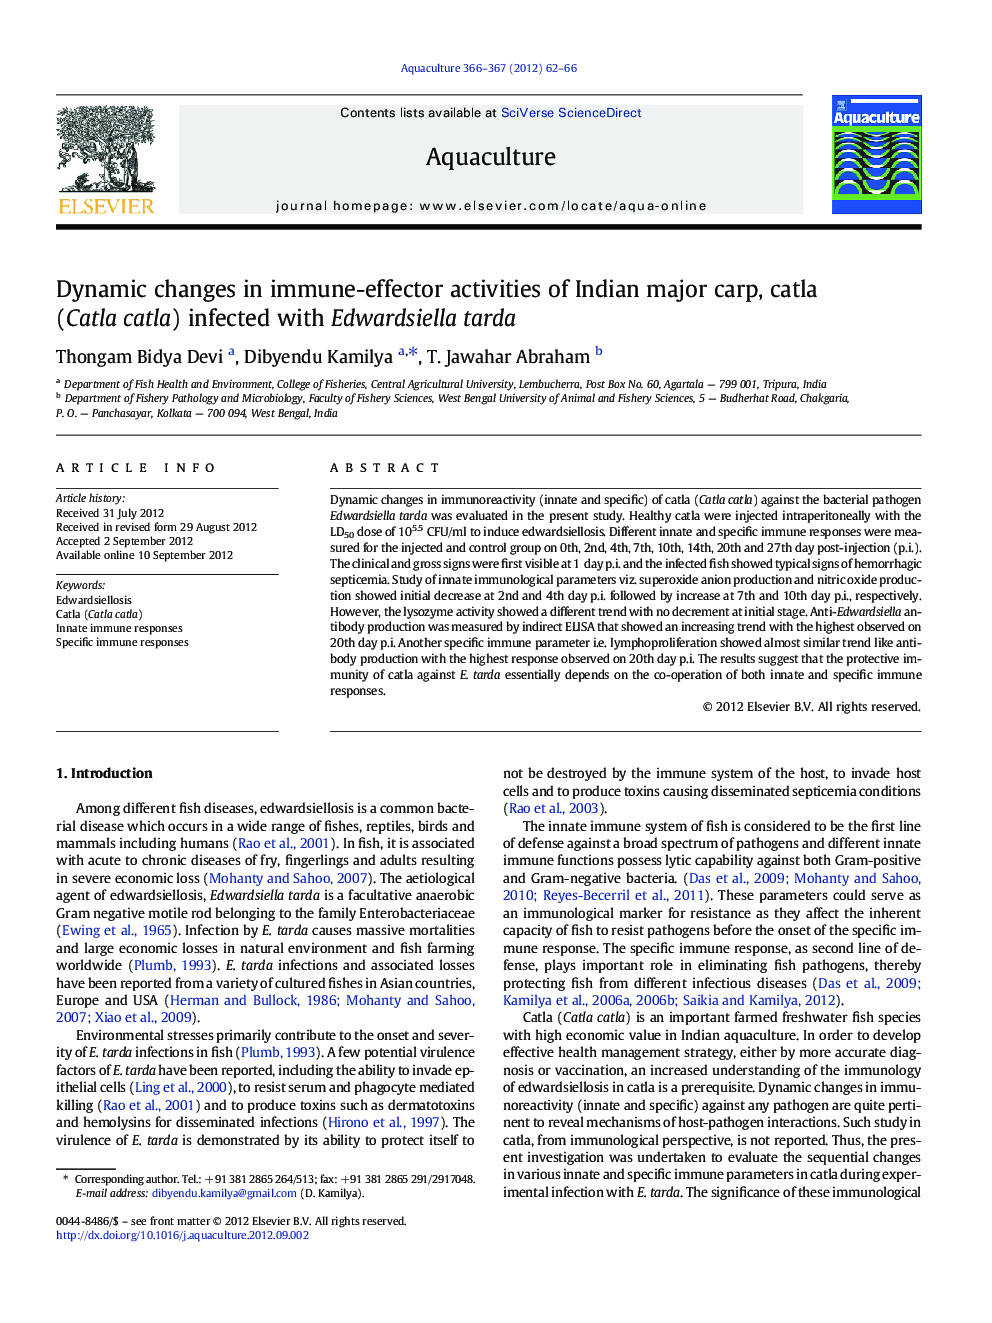 Dynamic changes in immune-effector activities of Indian major carp, catla (Catla catla) infected with Edwardsiella tarda